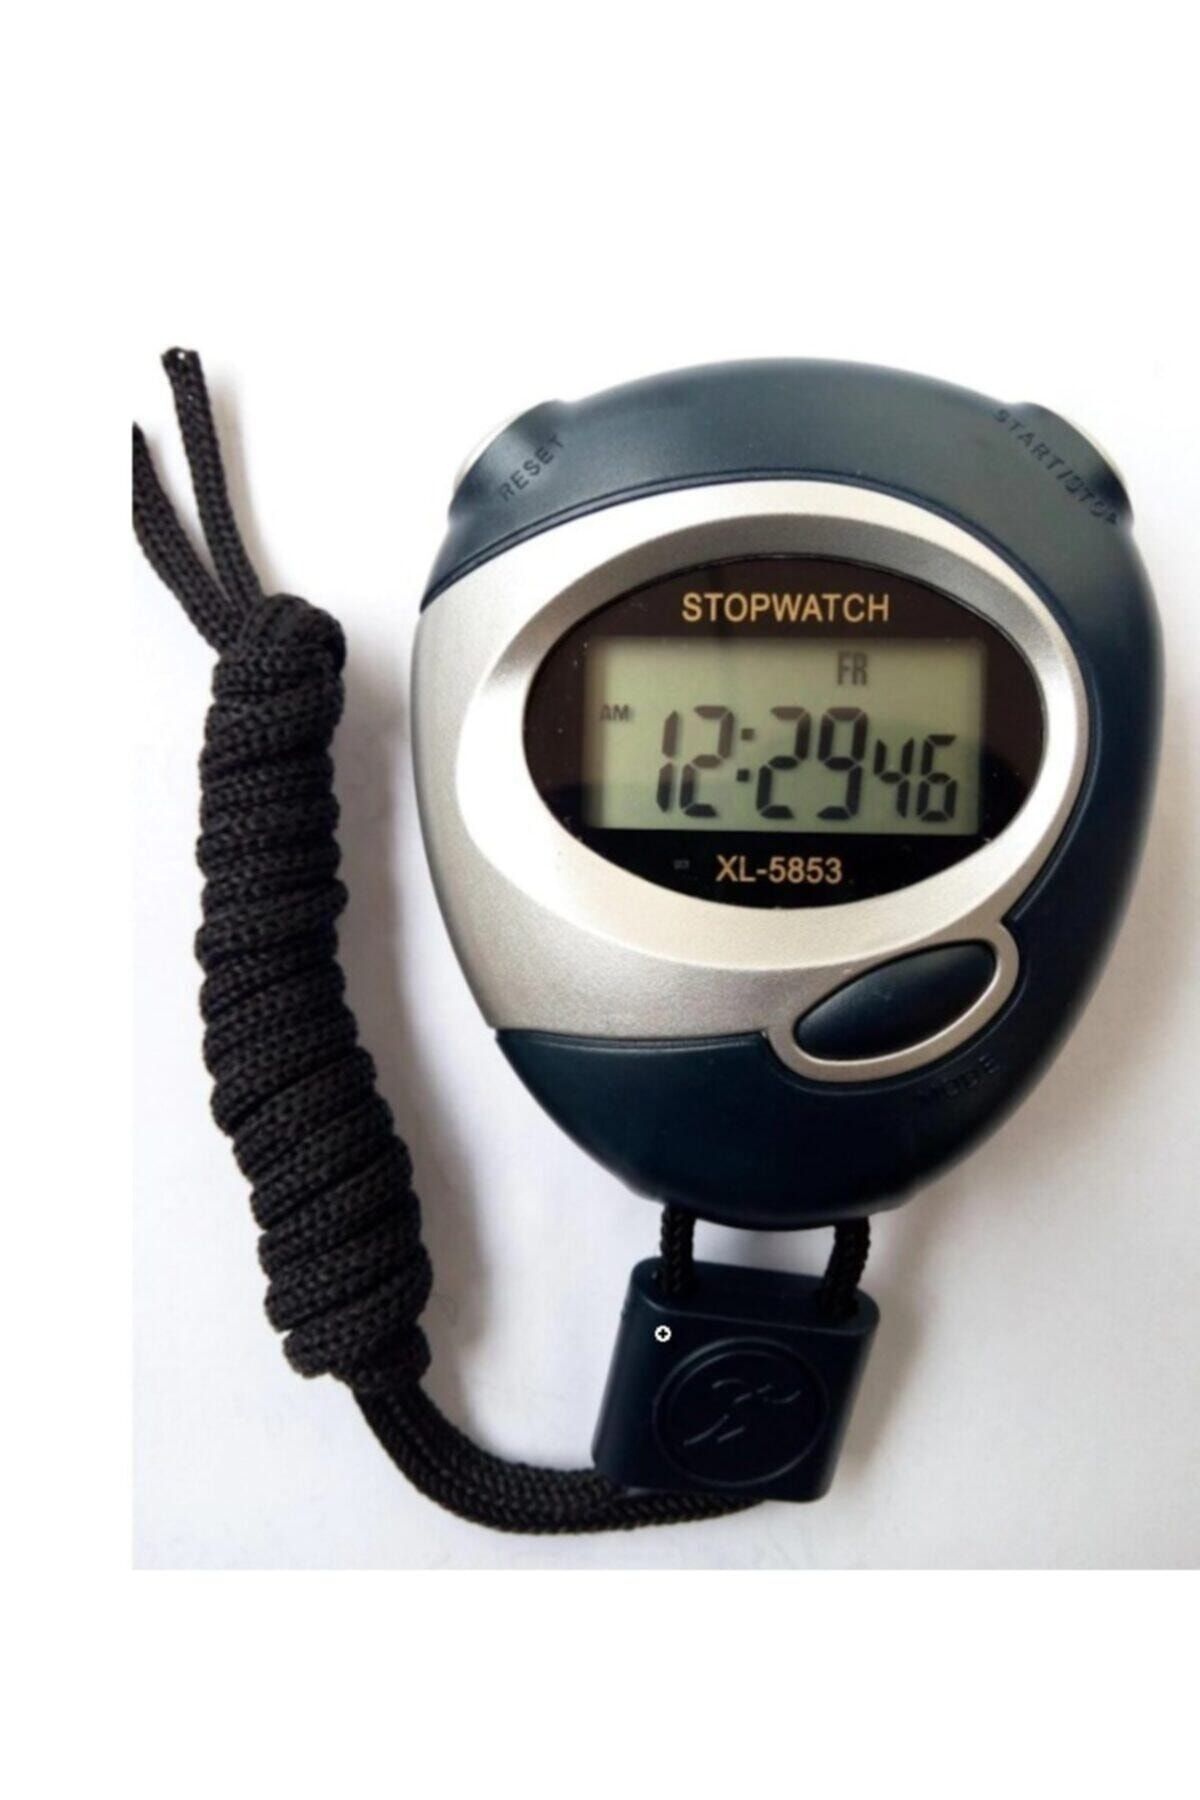 TEKNO İSTANBUL Kronometre Stopwatch Xl-5853